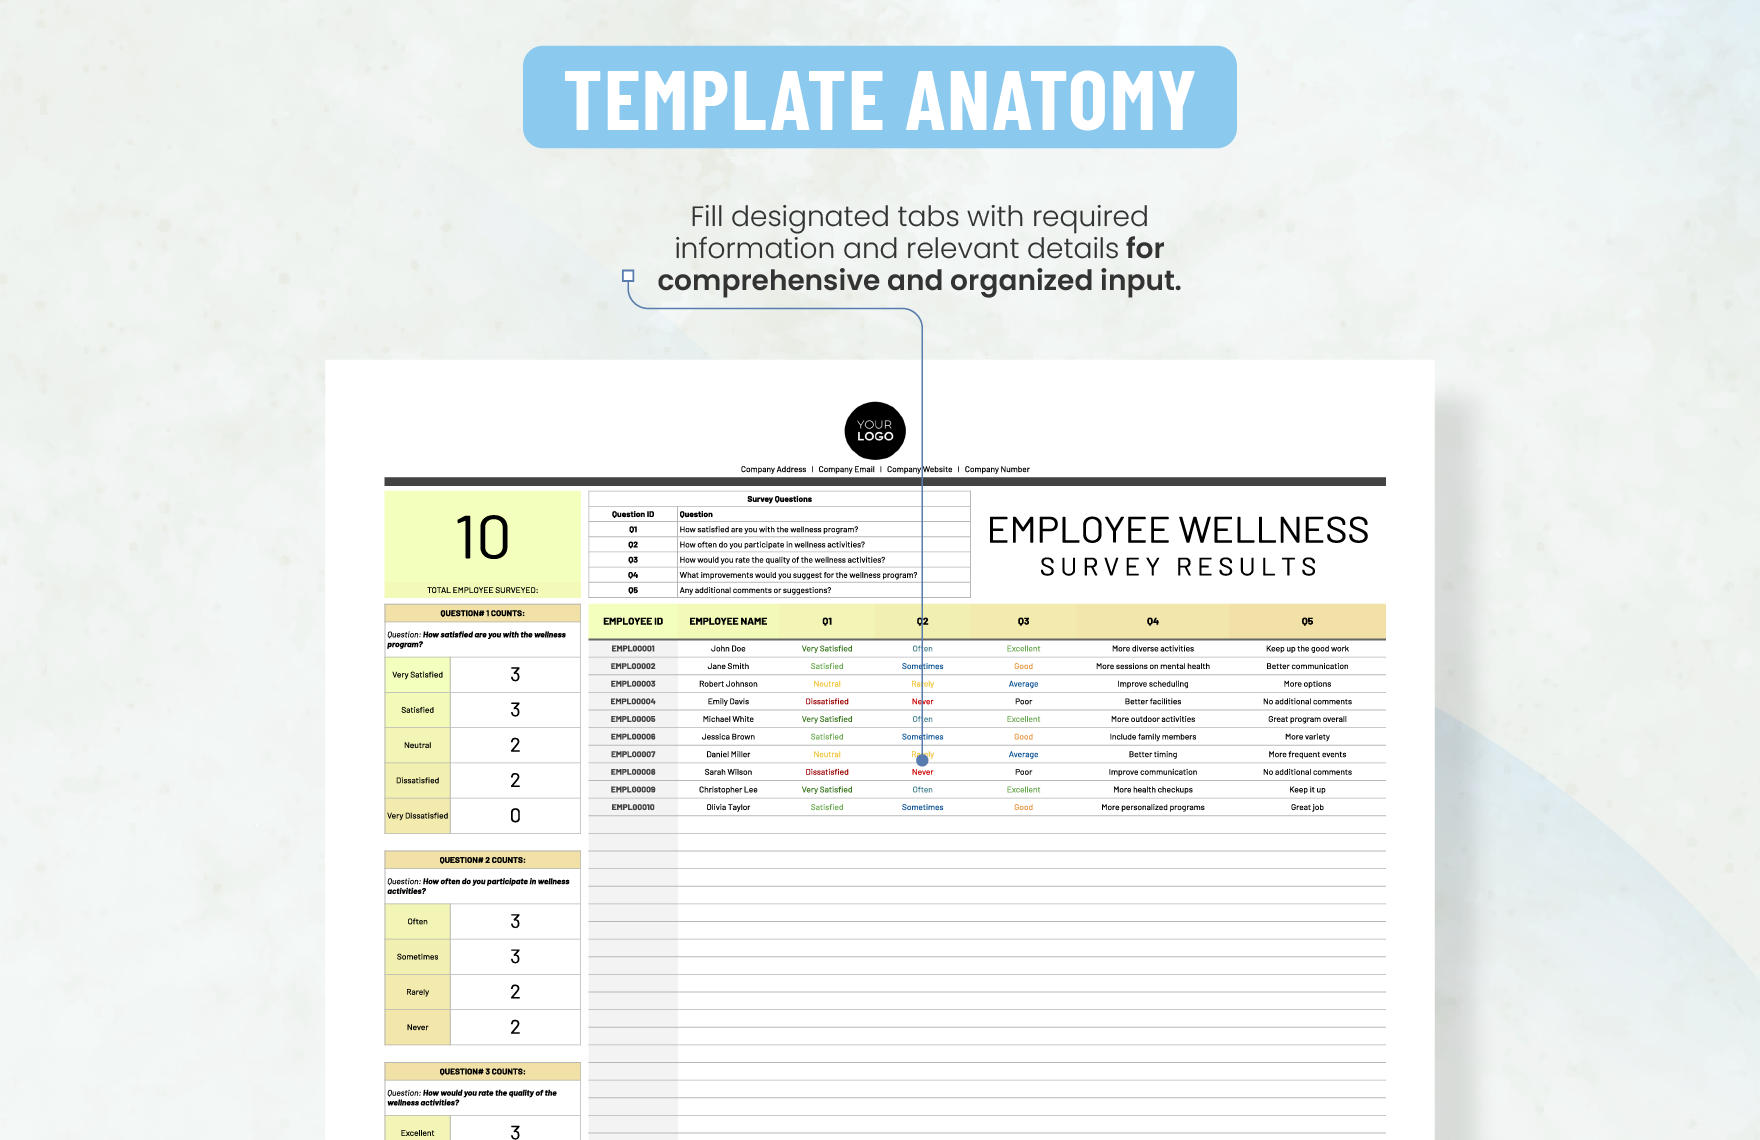 Employee Wellness Survey Results Template